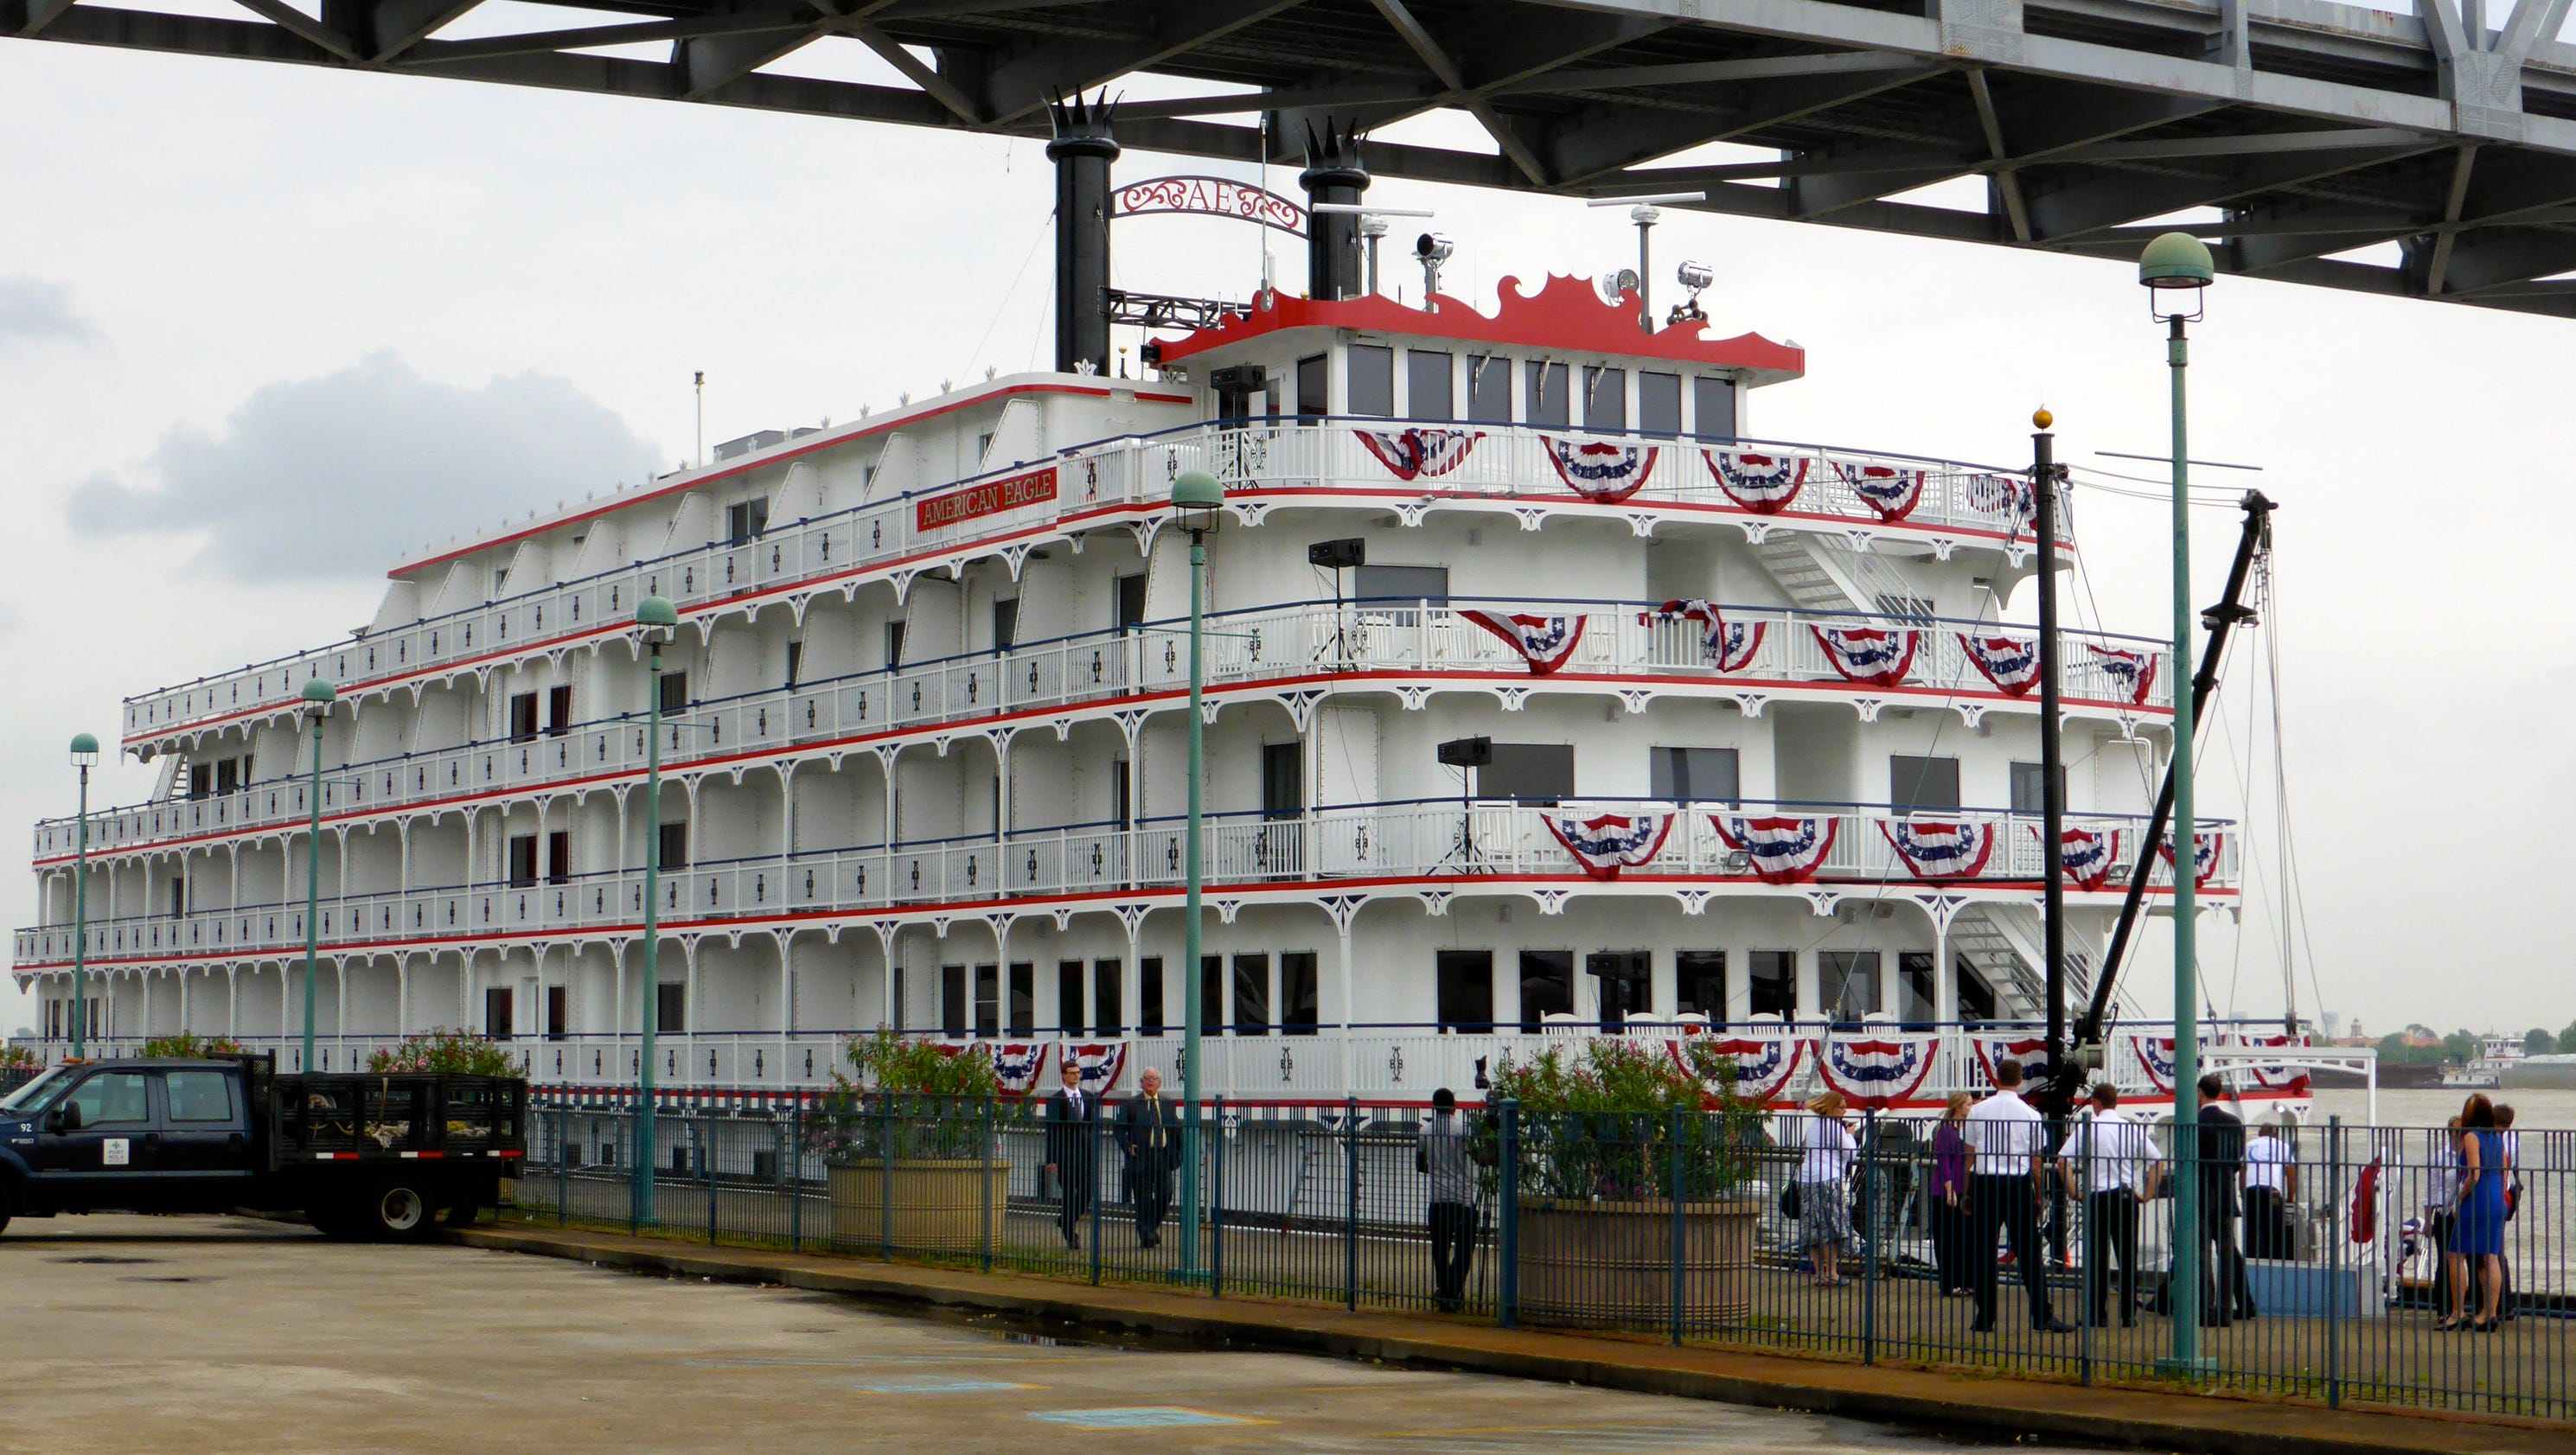 Cruise ship tours: American Cruise Line's American Eagle